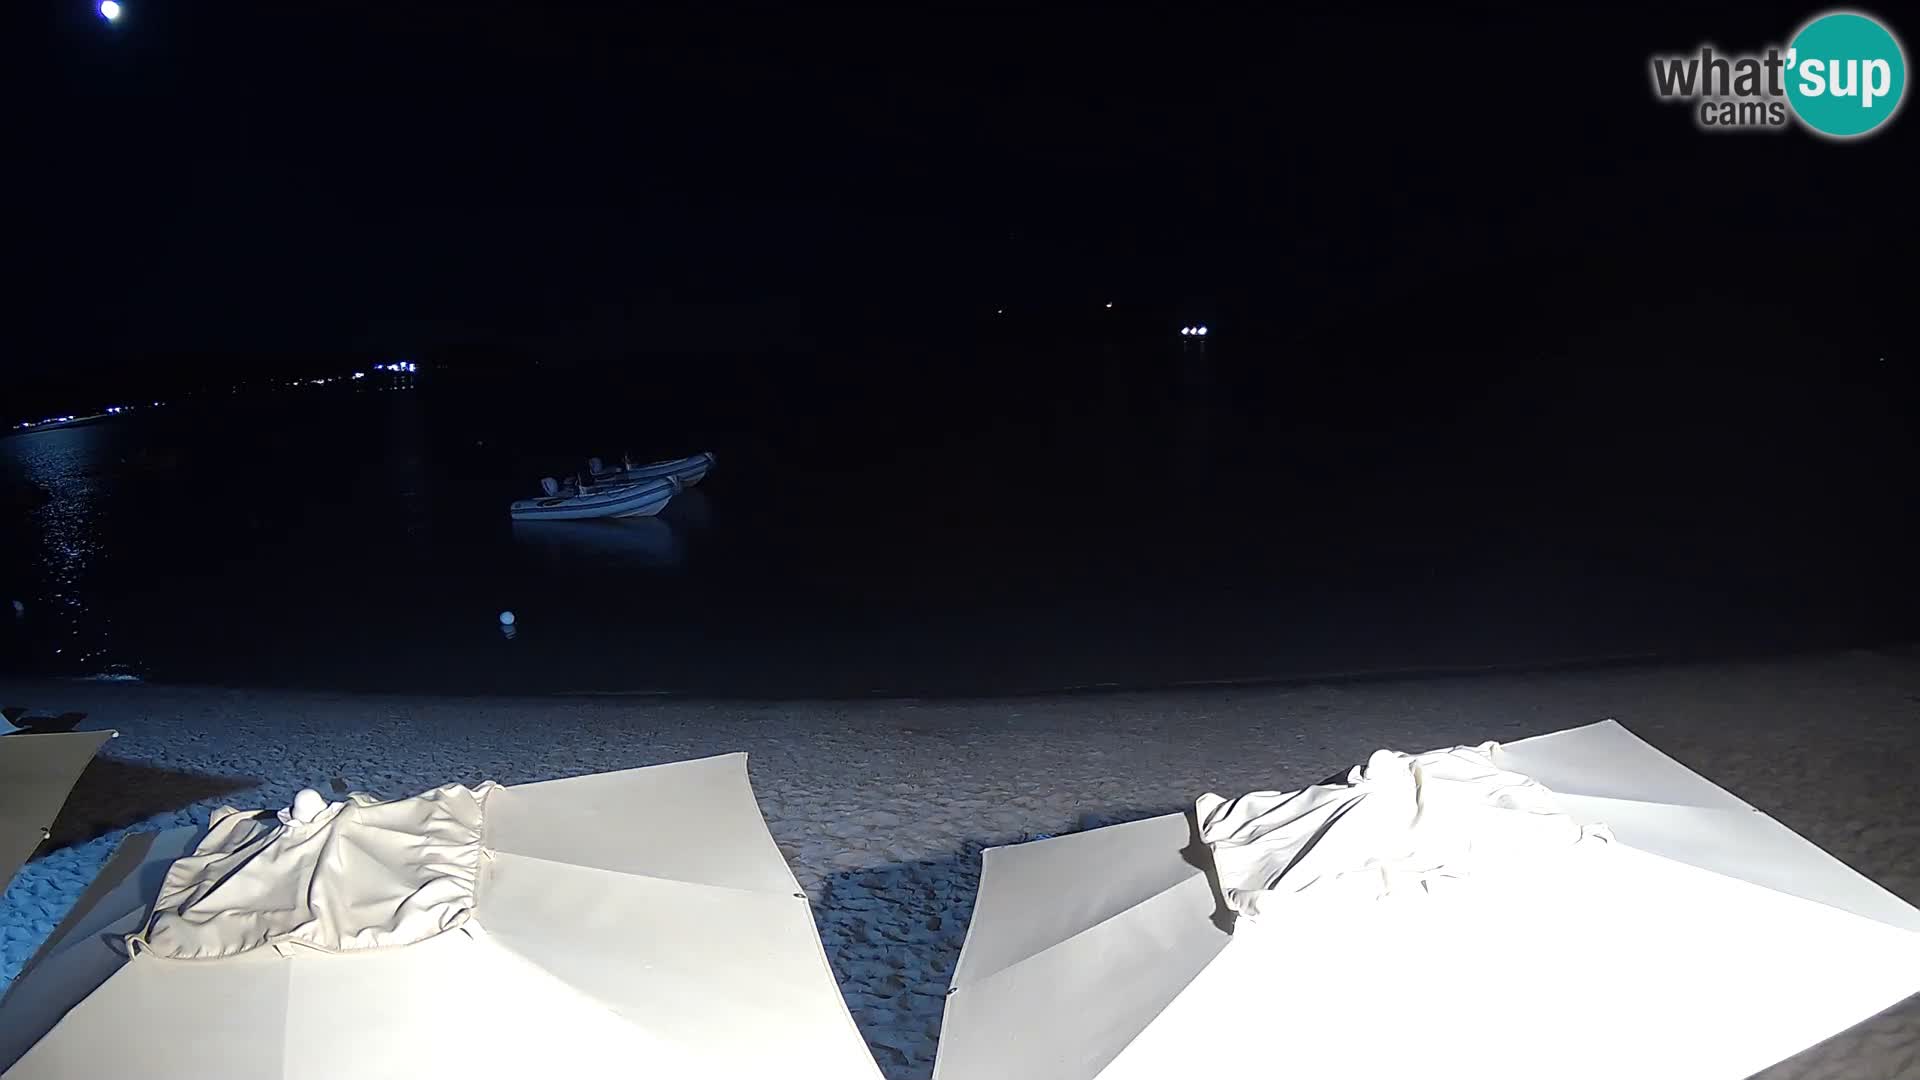 Live Webcam Mugoni beach – Alghero – Sardinia – Italy